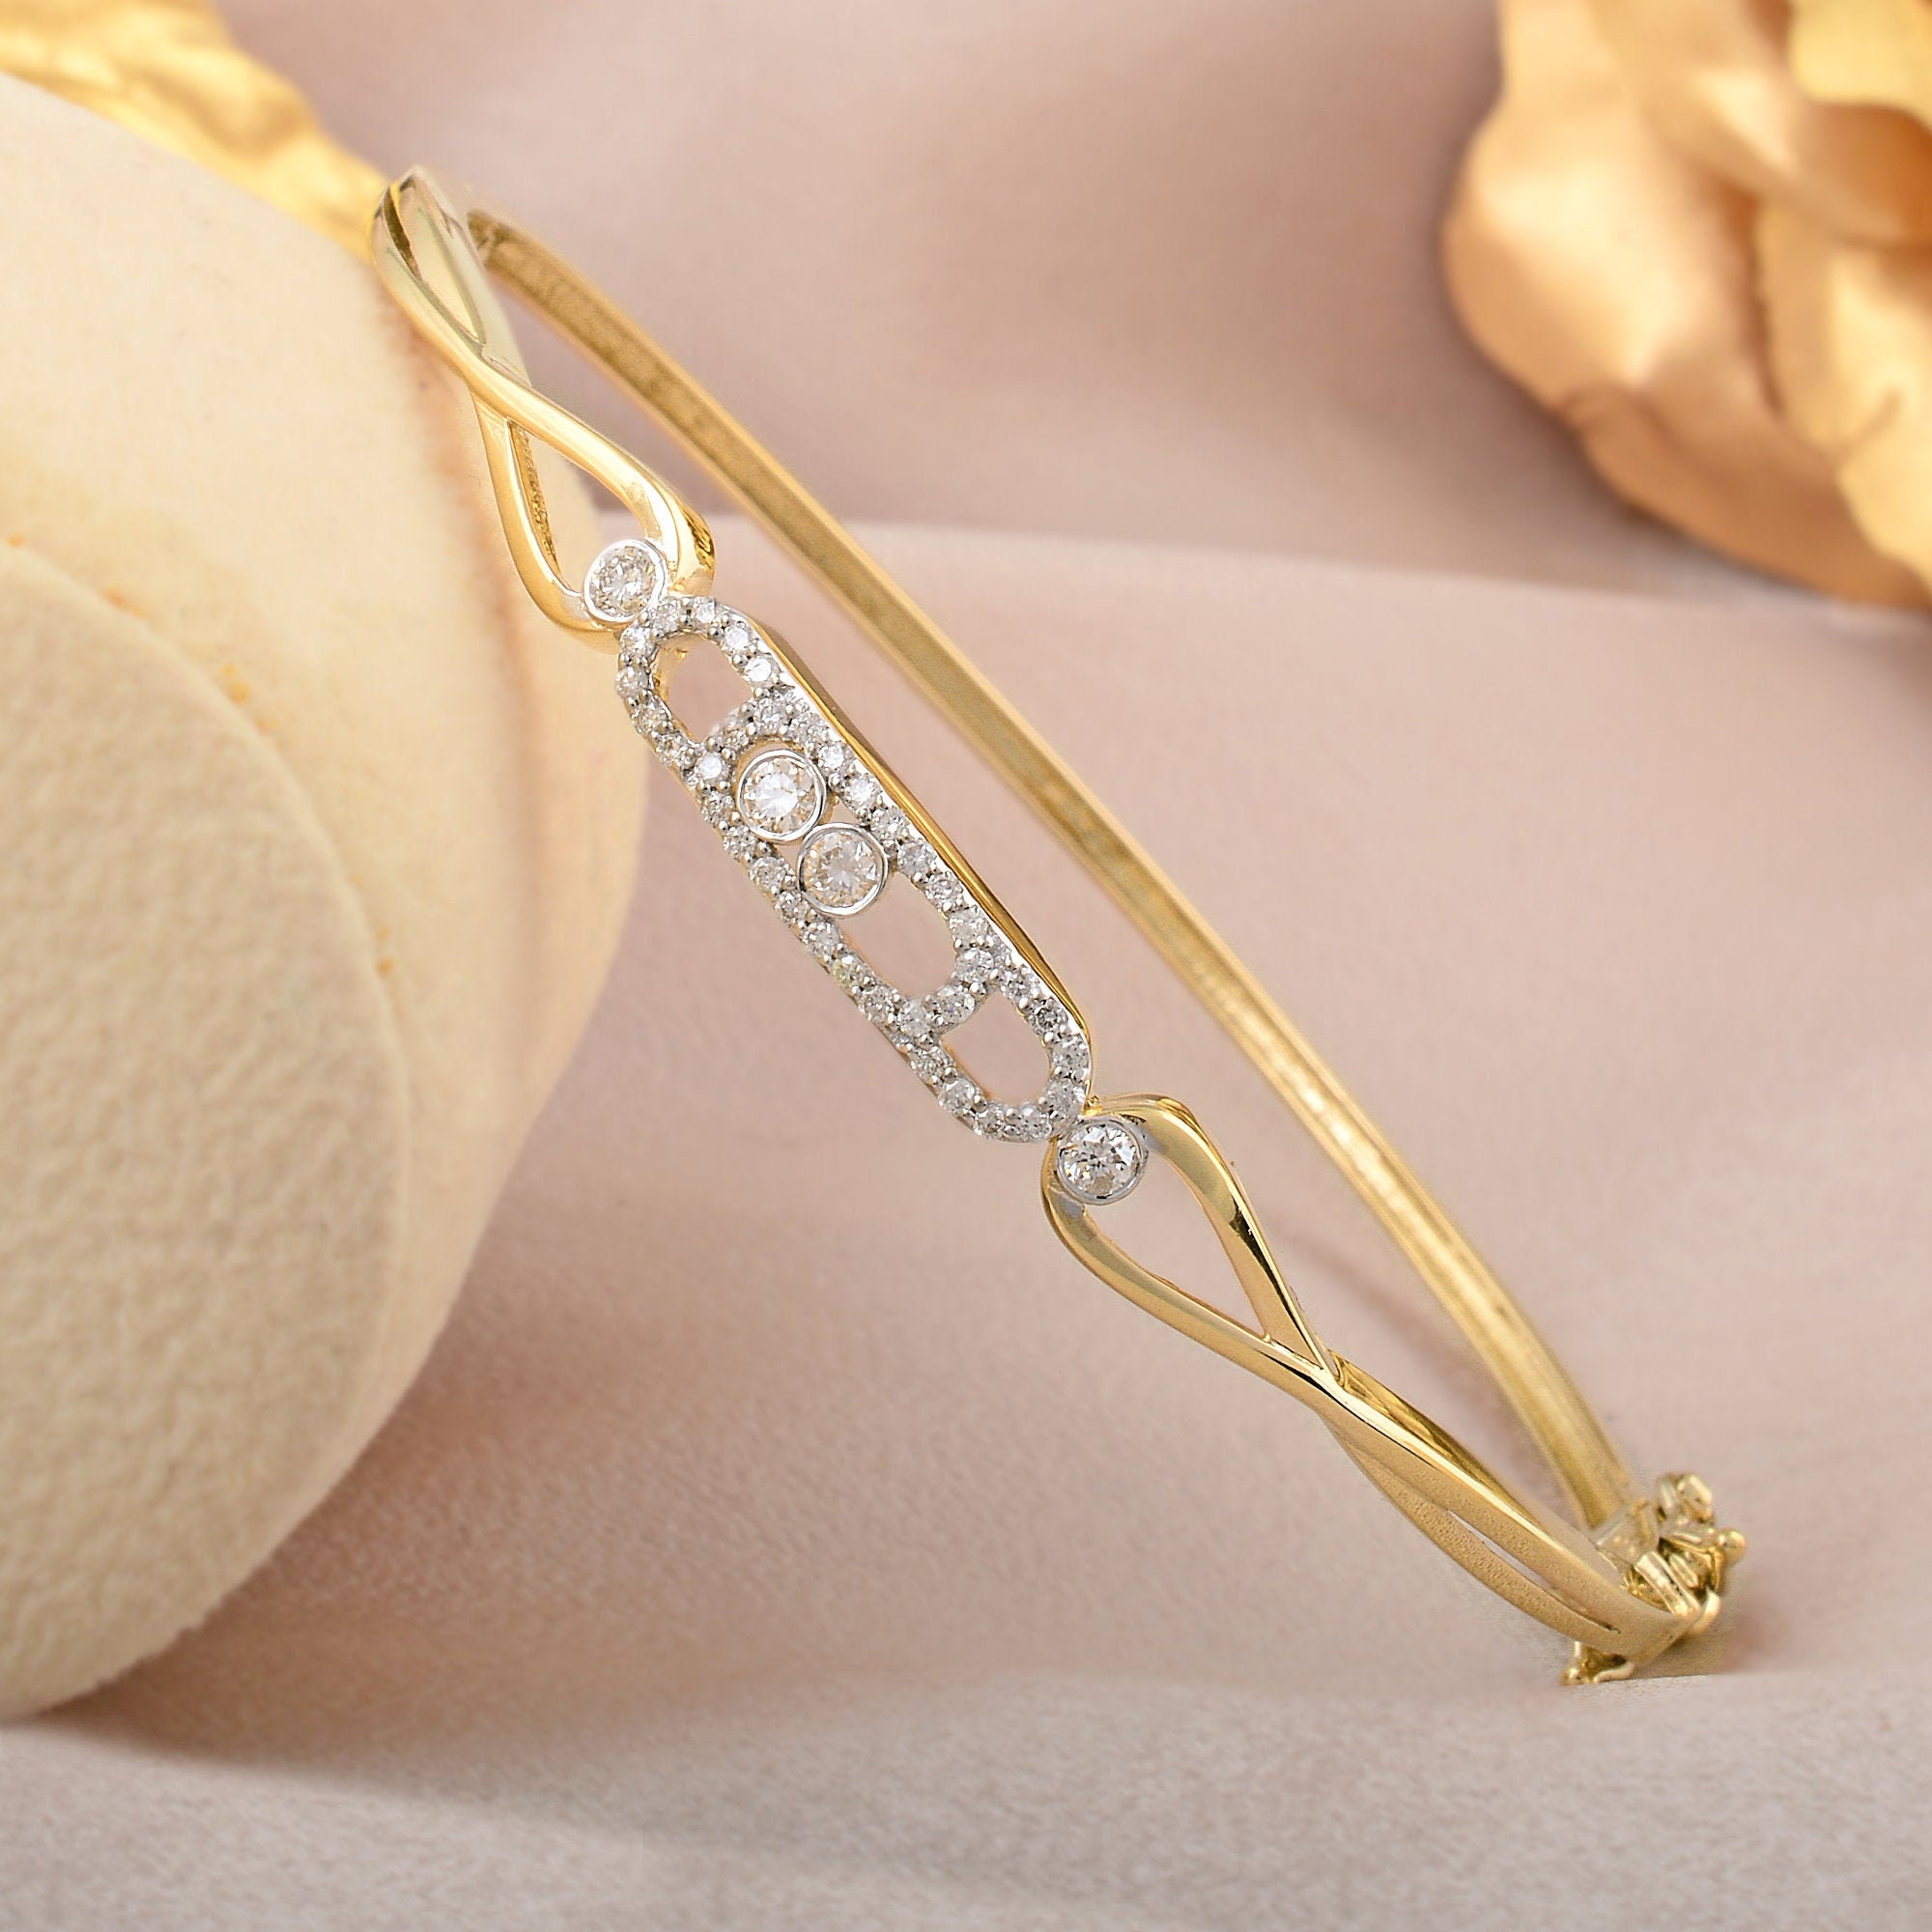 0.34 Ct Natural Diamond Bangle, 14K Solid Gold Round Dainty Bracelet, Diamond Gift Ideas, Fine Jewelry